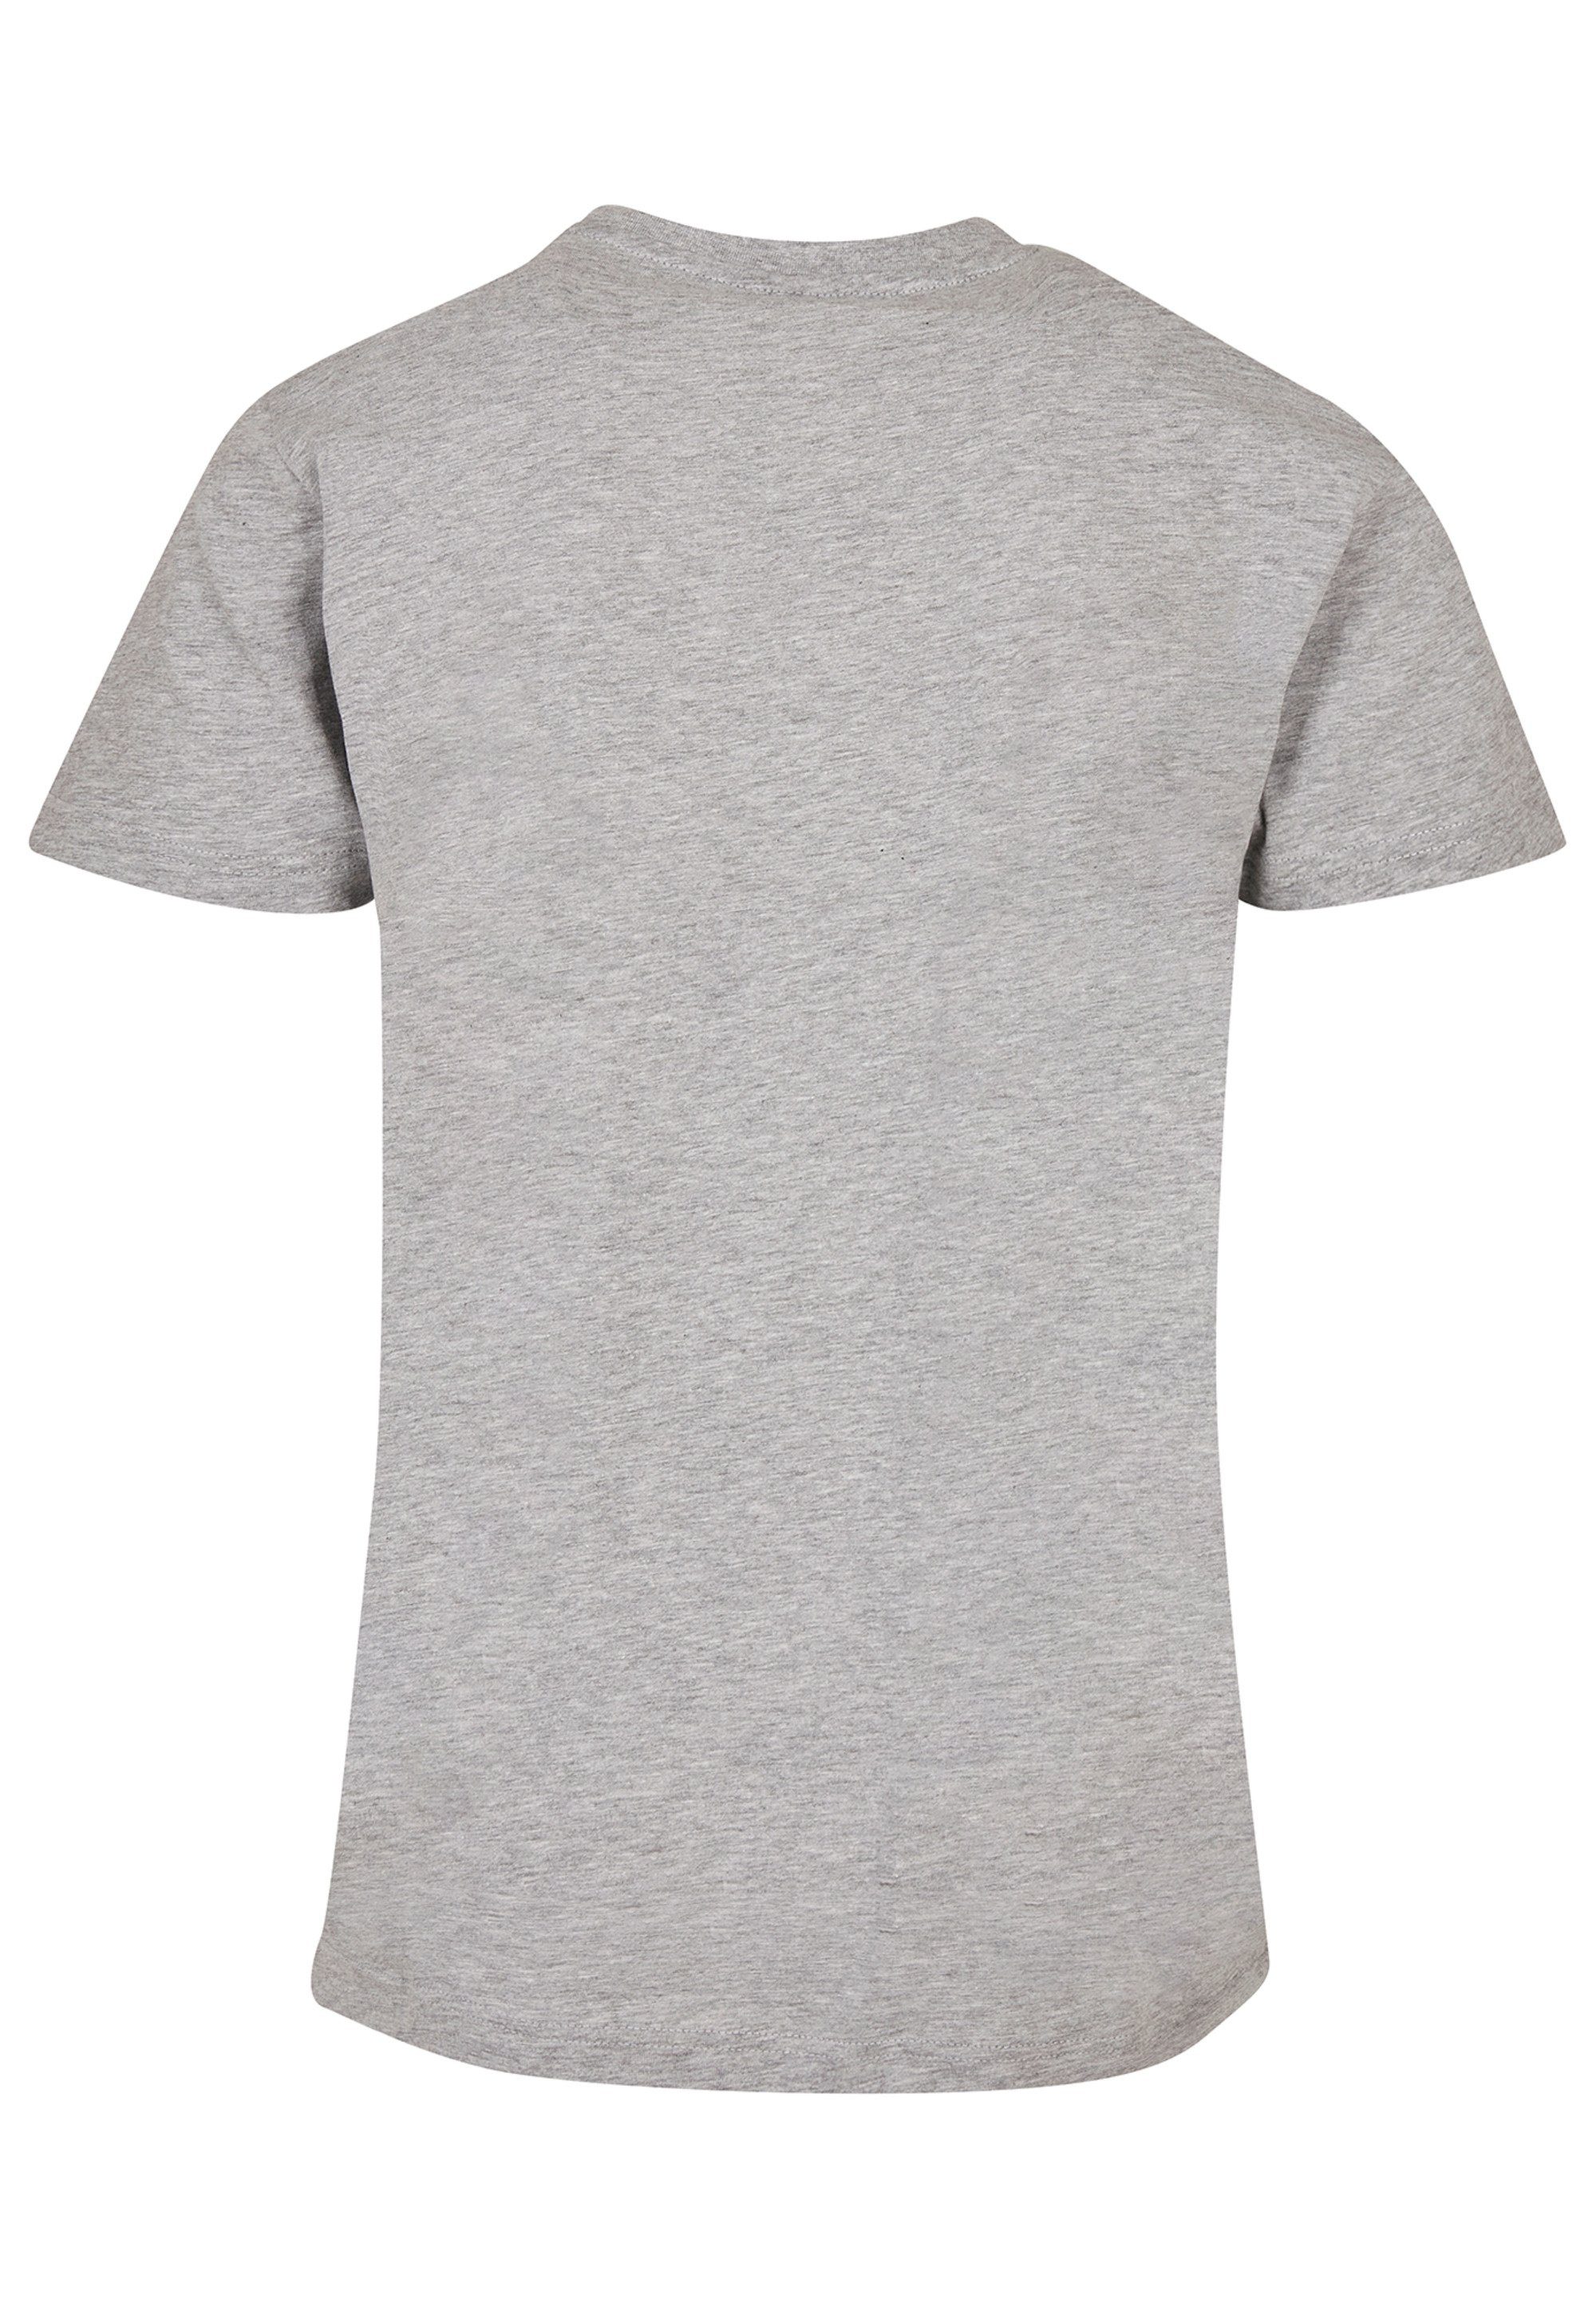 F4NT4STIC T-Shirt East Village Print heather grey UNISEX TEE Manhatten